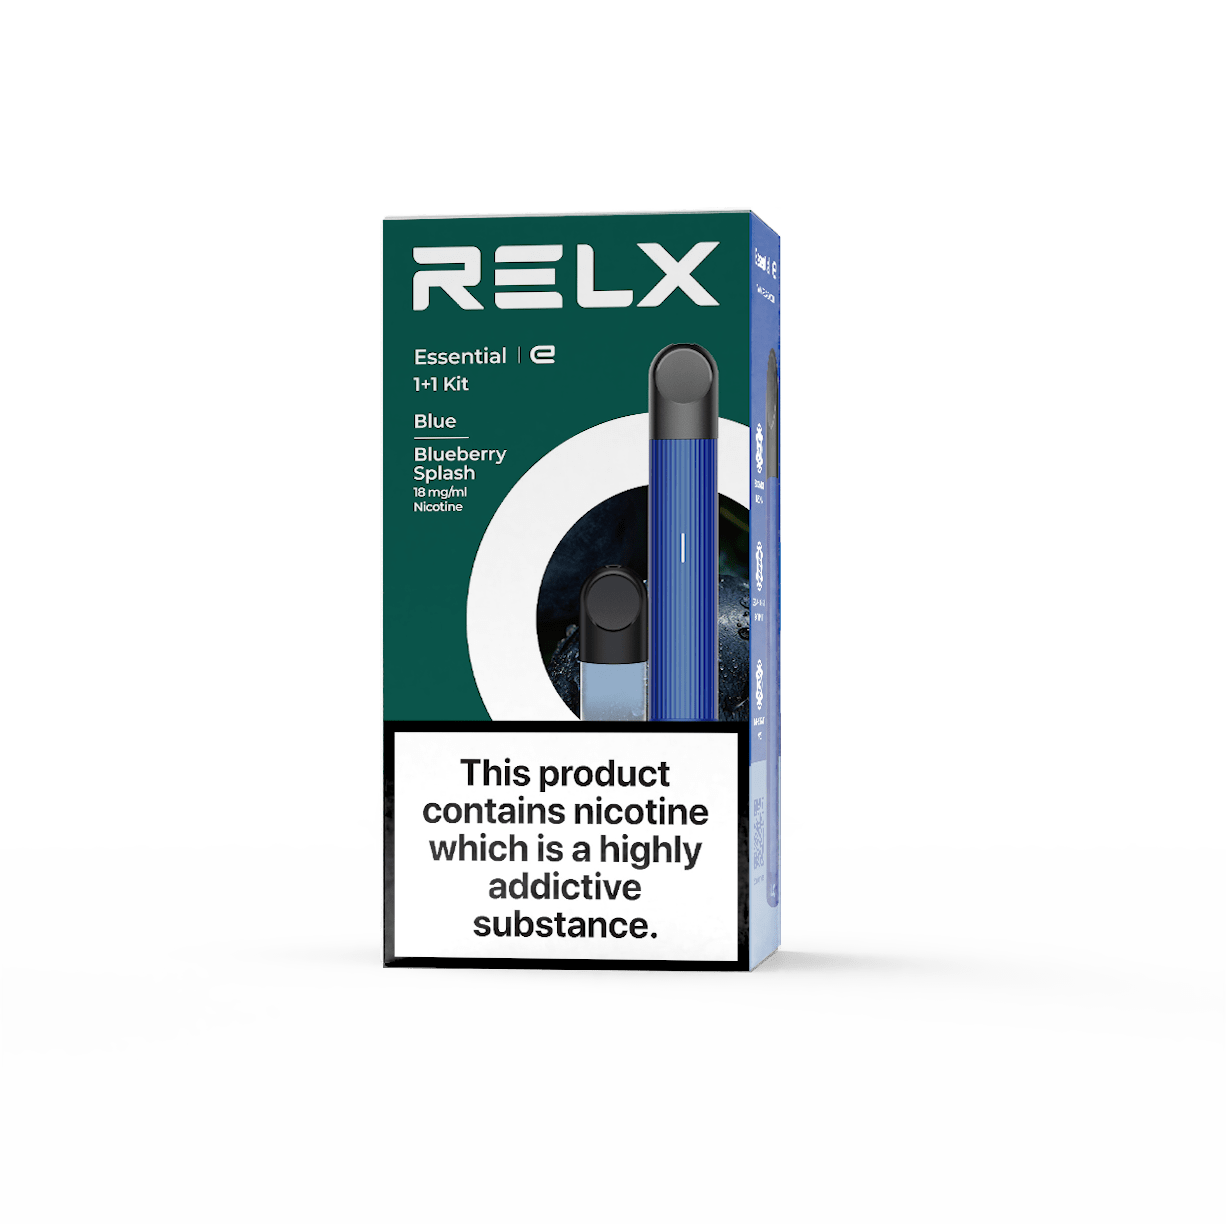 RELX Essential Starter Kit | RELX Canada Official